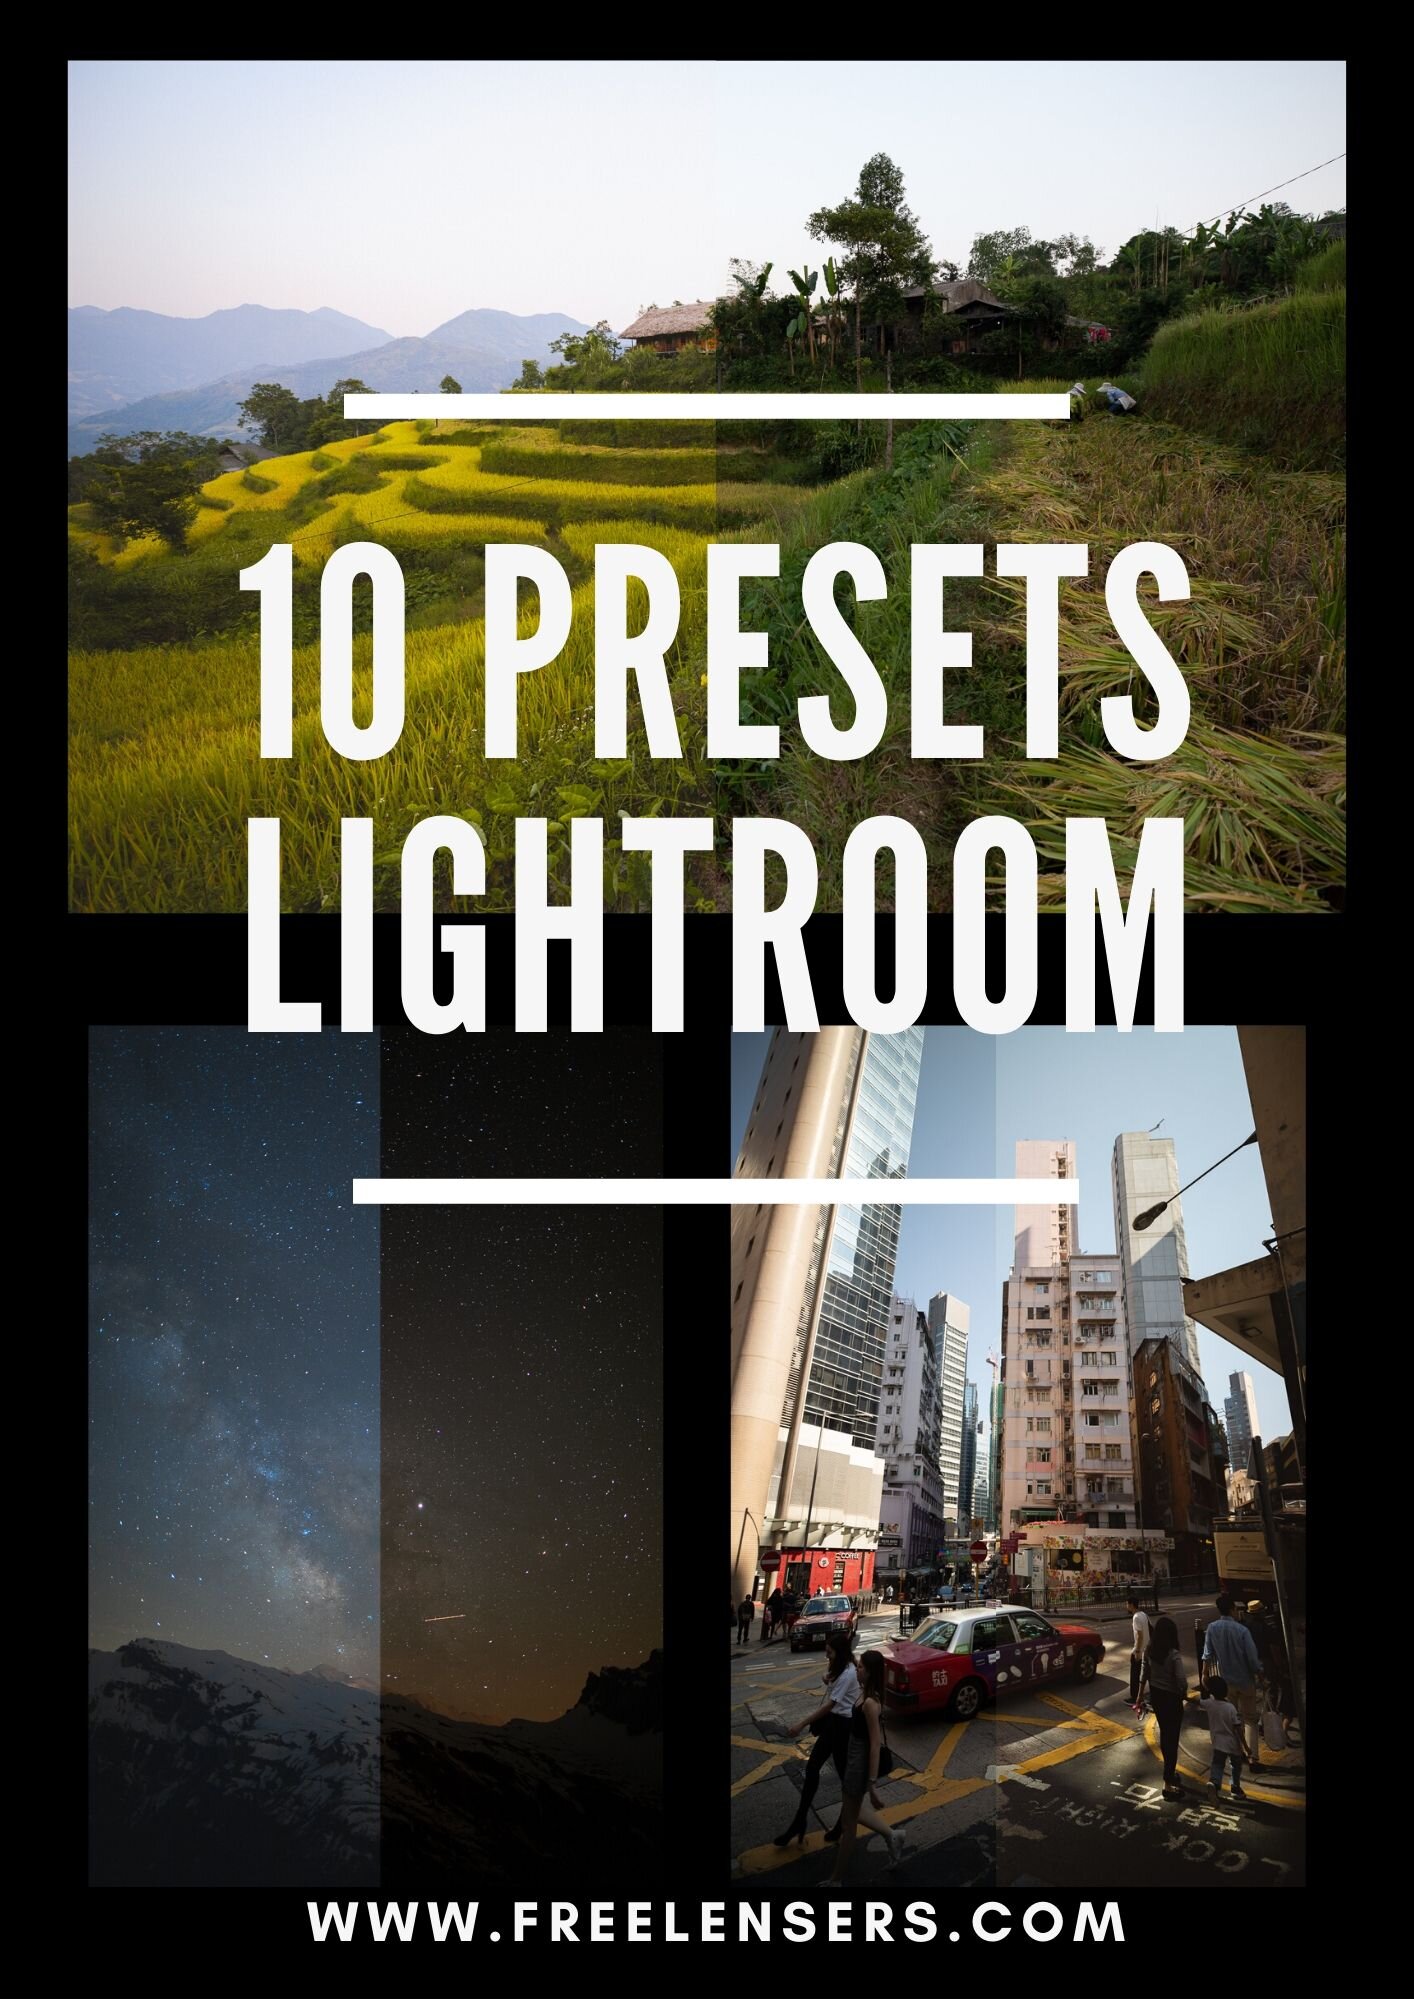 presets lightroom freelensers.jpg